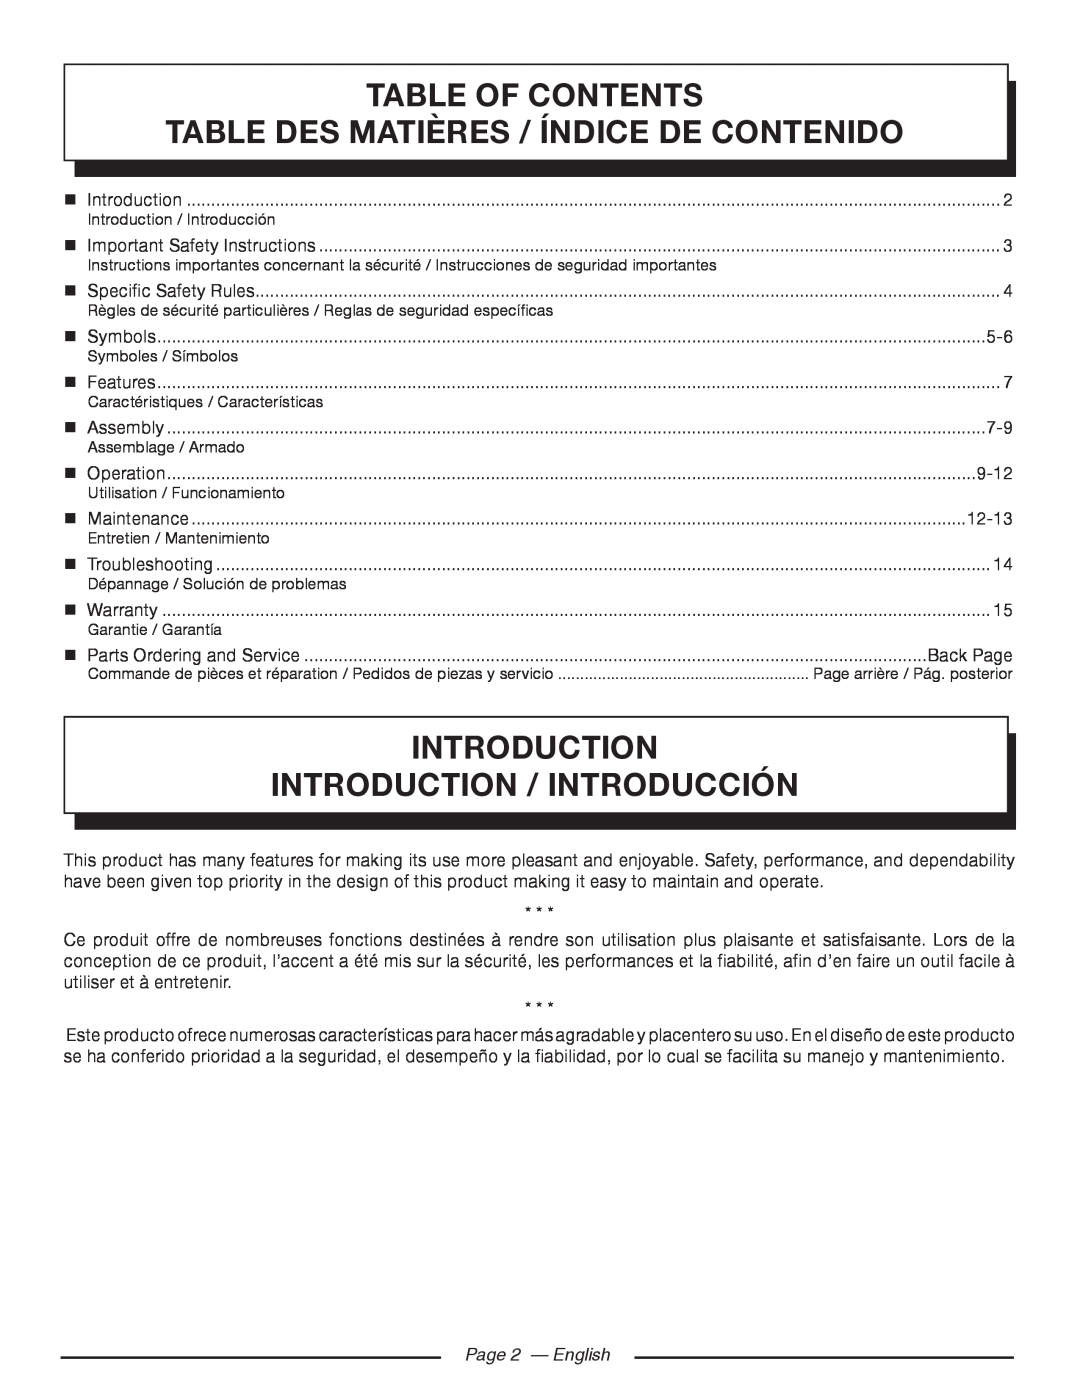 Homelite UT80993 Table Of Contents Table Des Matières / Índice De Contenido, Introduction Introduction / Introducción 